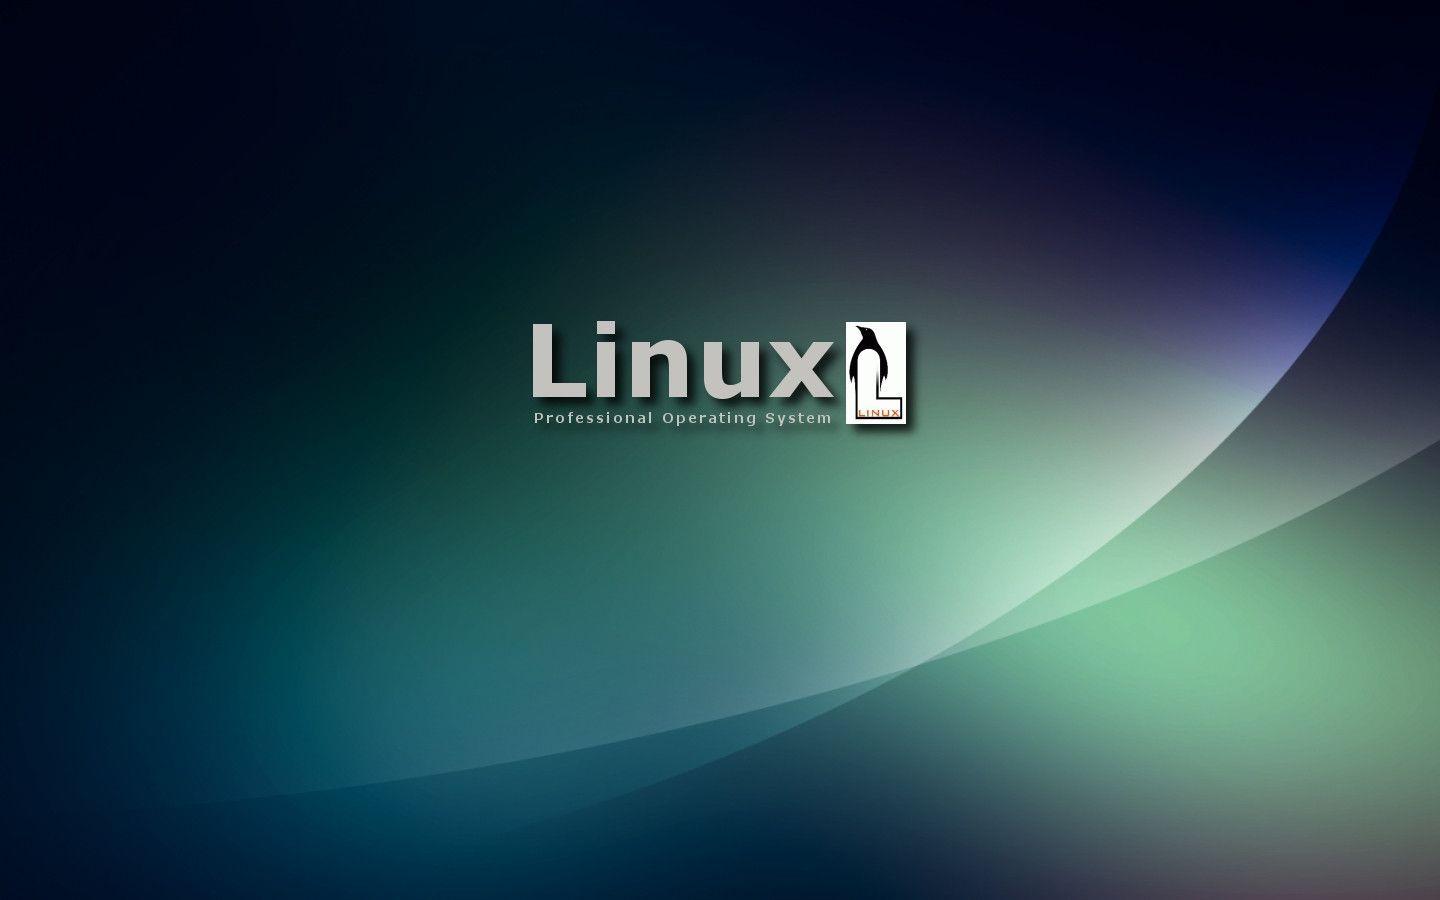 Linux 12 High Res Image. HD Desktop Wallpaper